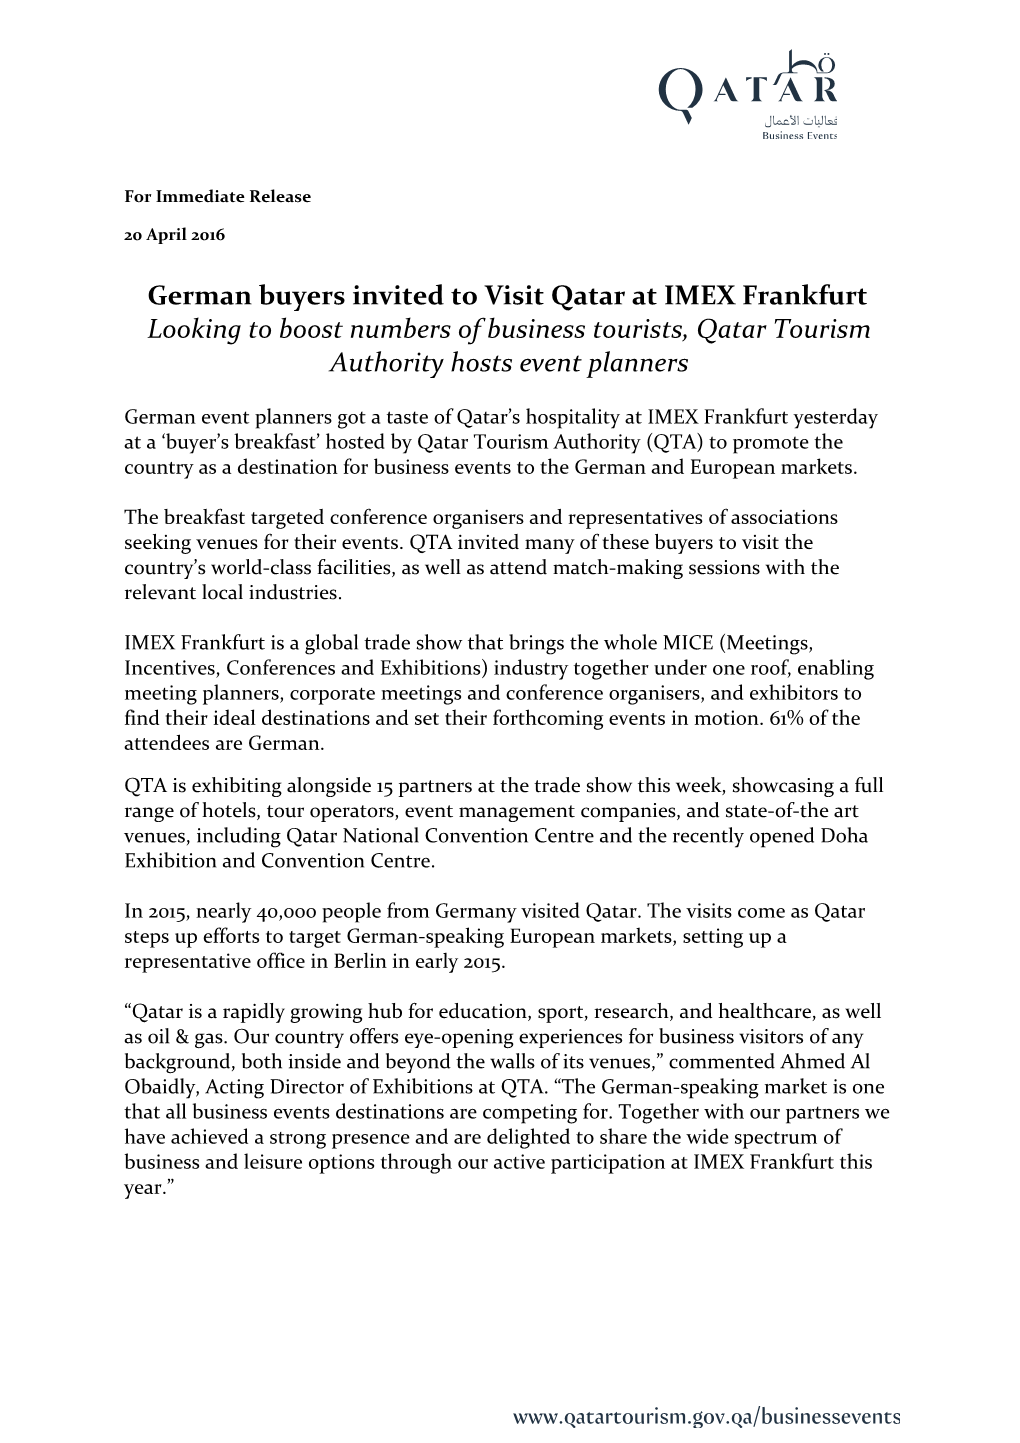 German Buyers Invited to Visit Qatar at IMEX Frankfurt